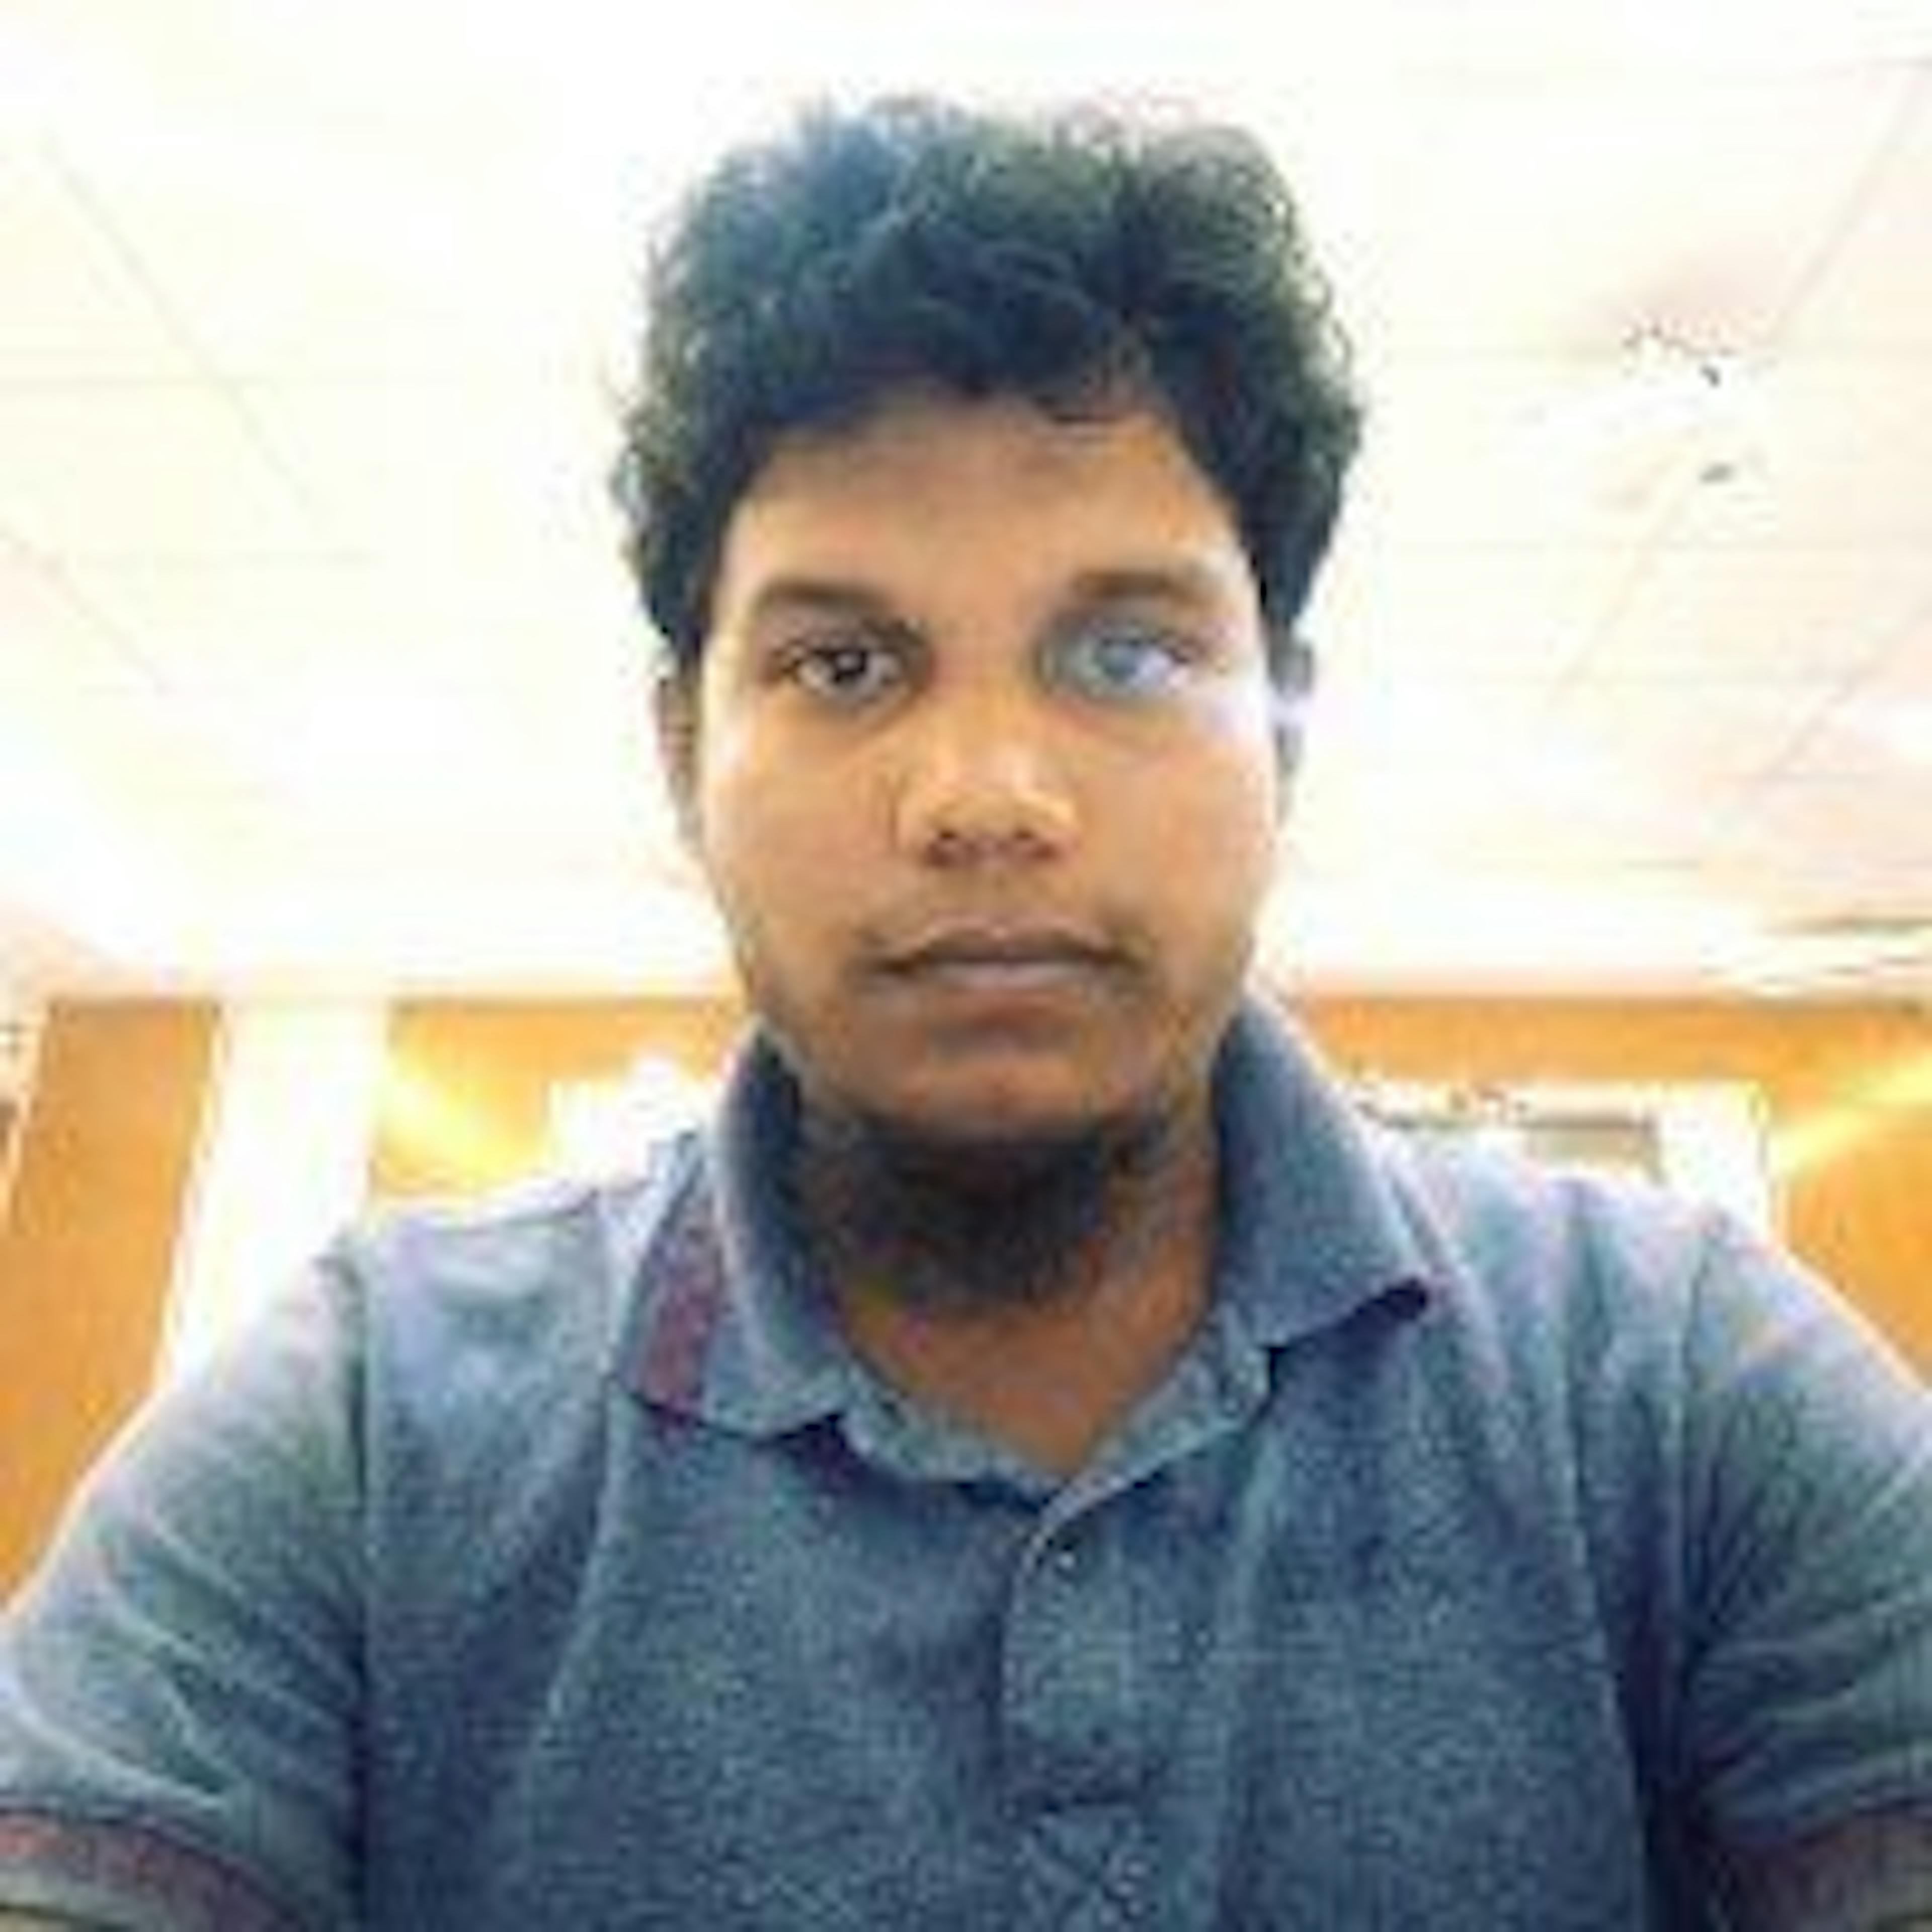 Jewel Chowdhury HackerNoon profile picture